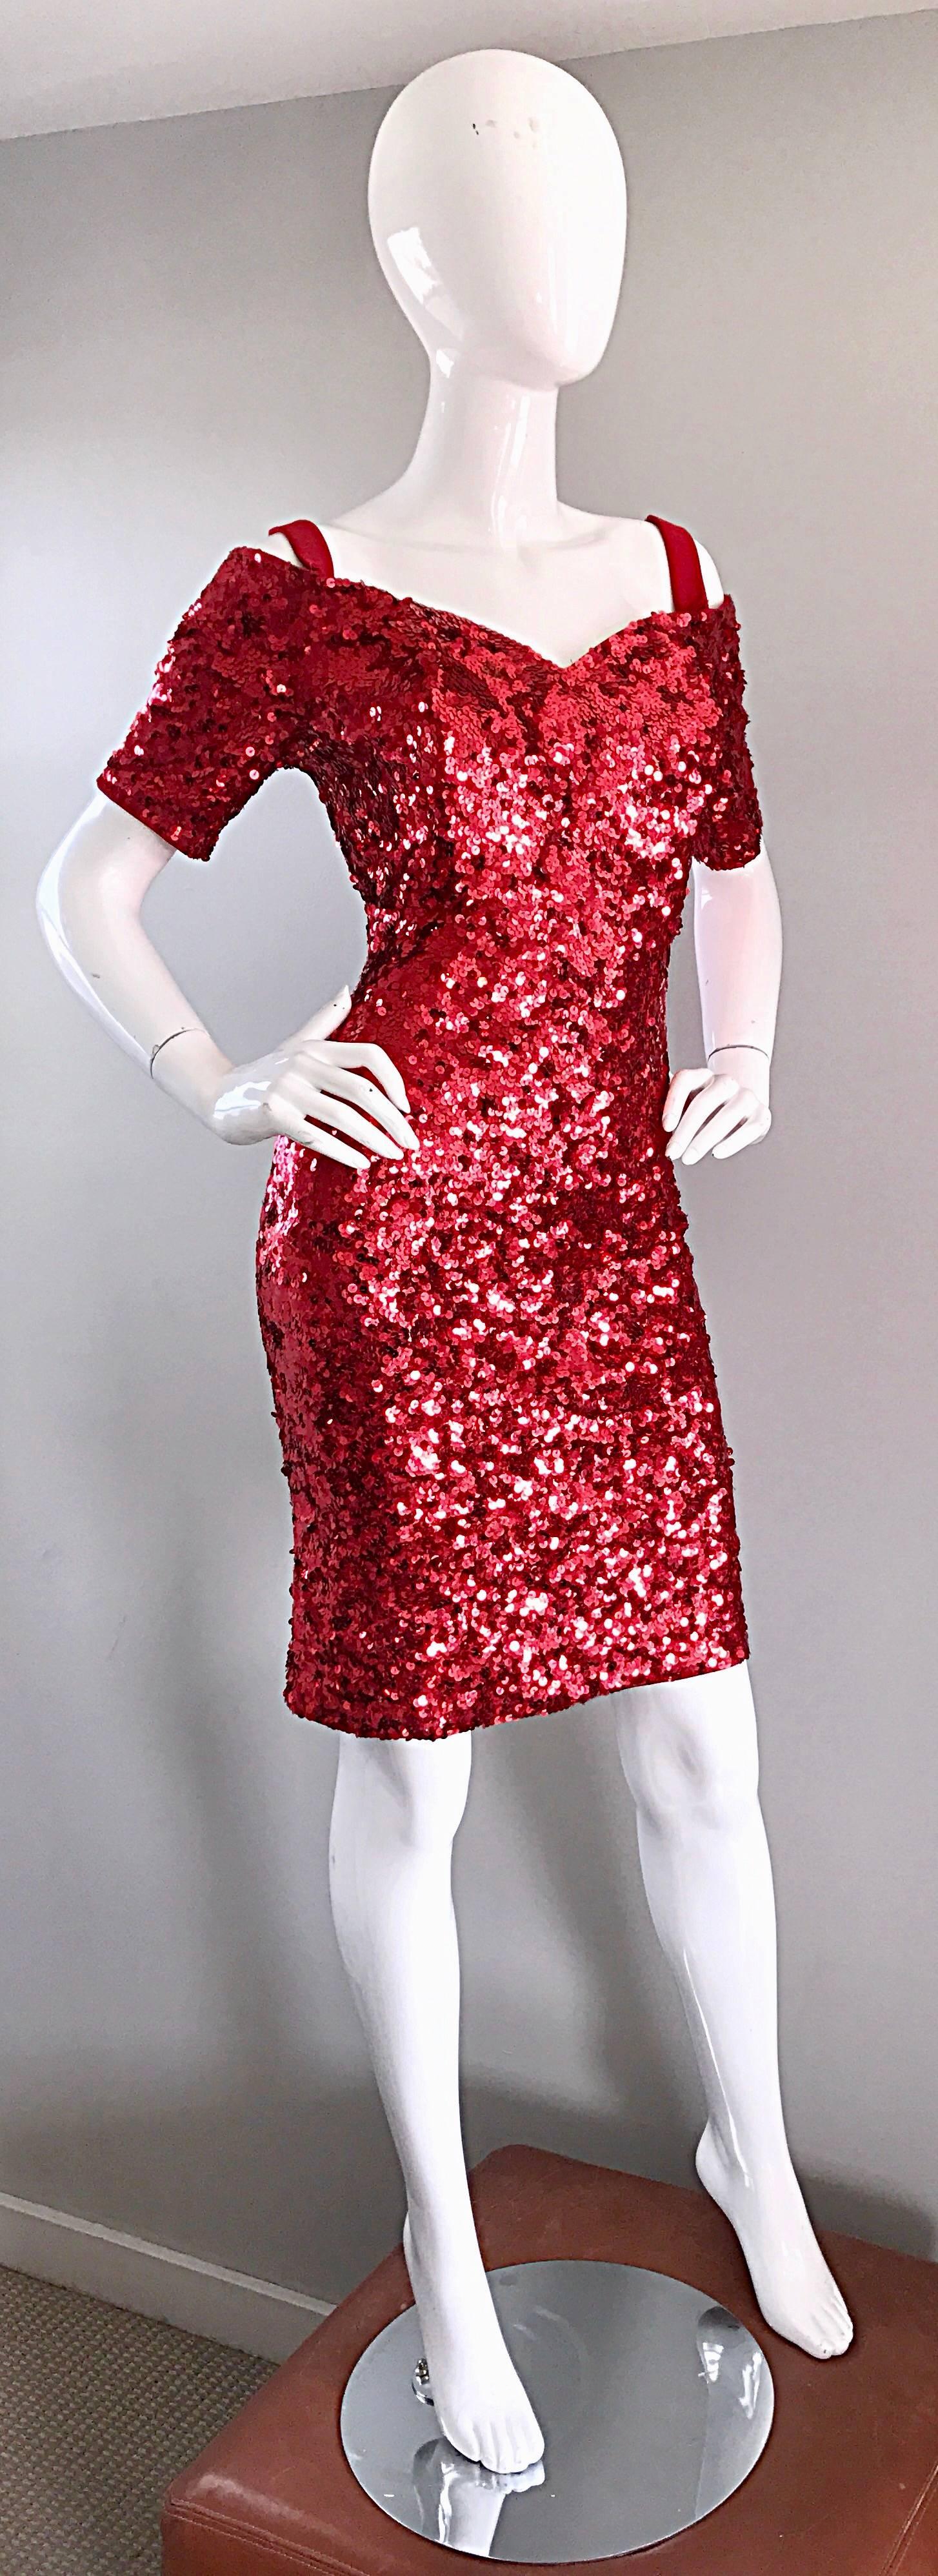 lillie rubin sequin dress